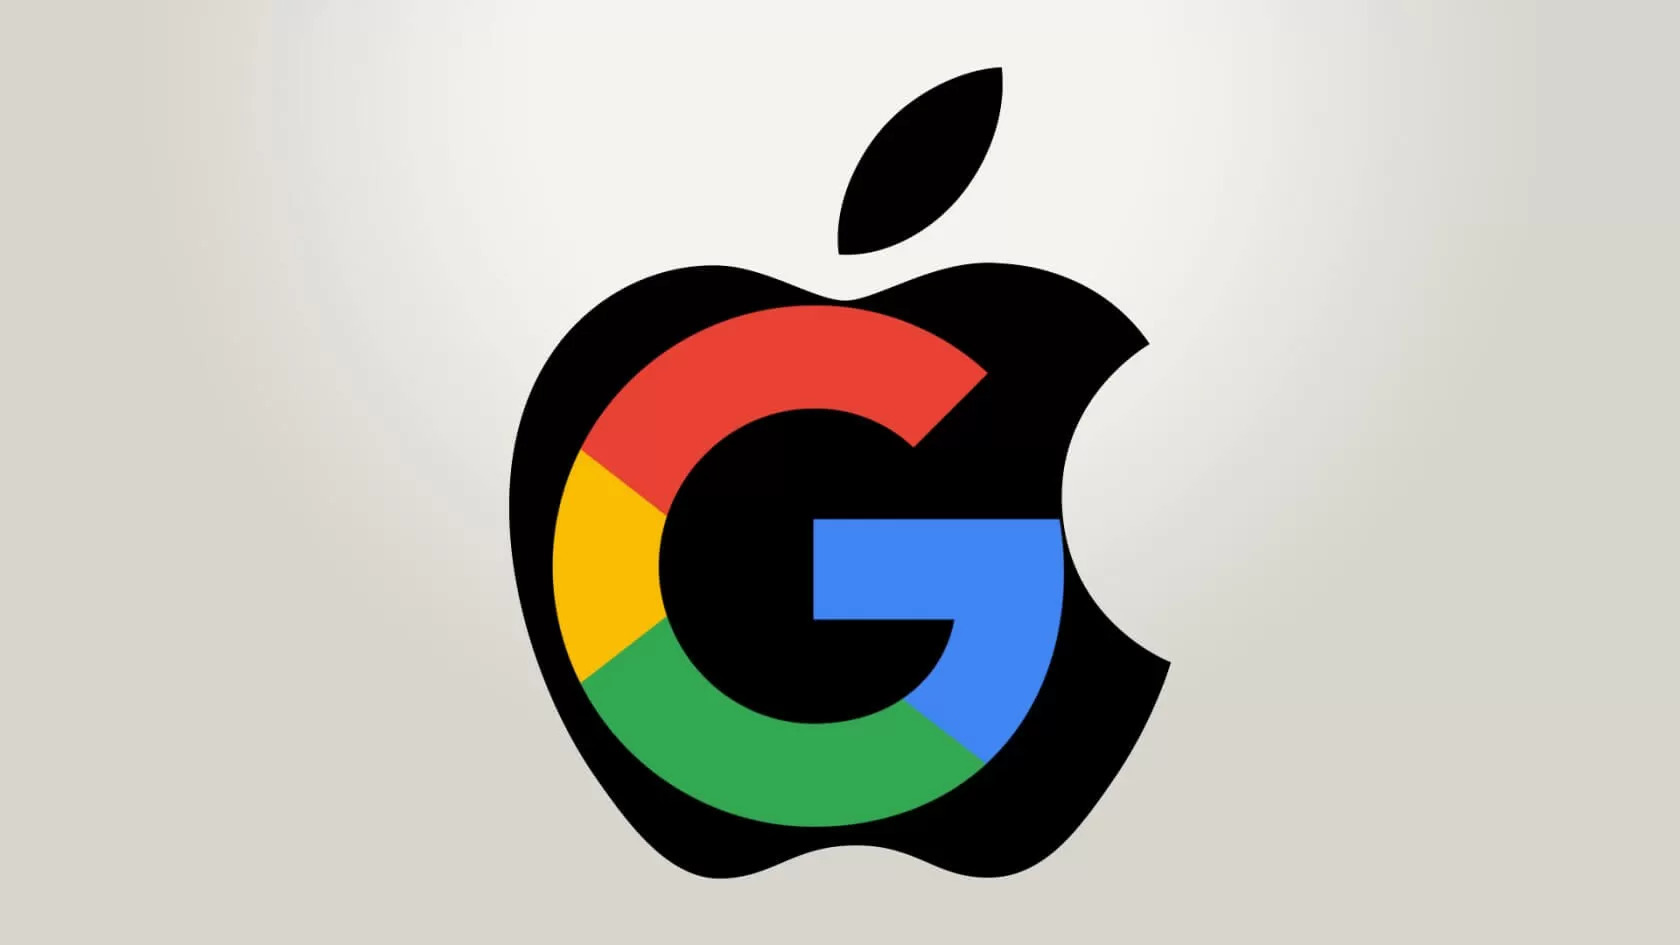     google apple    